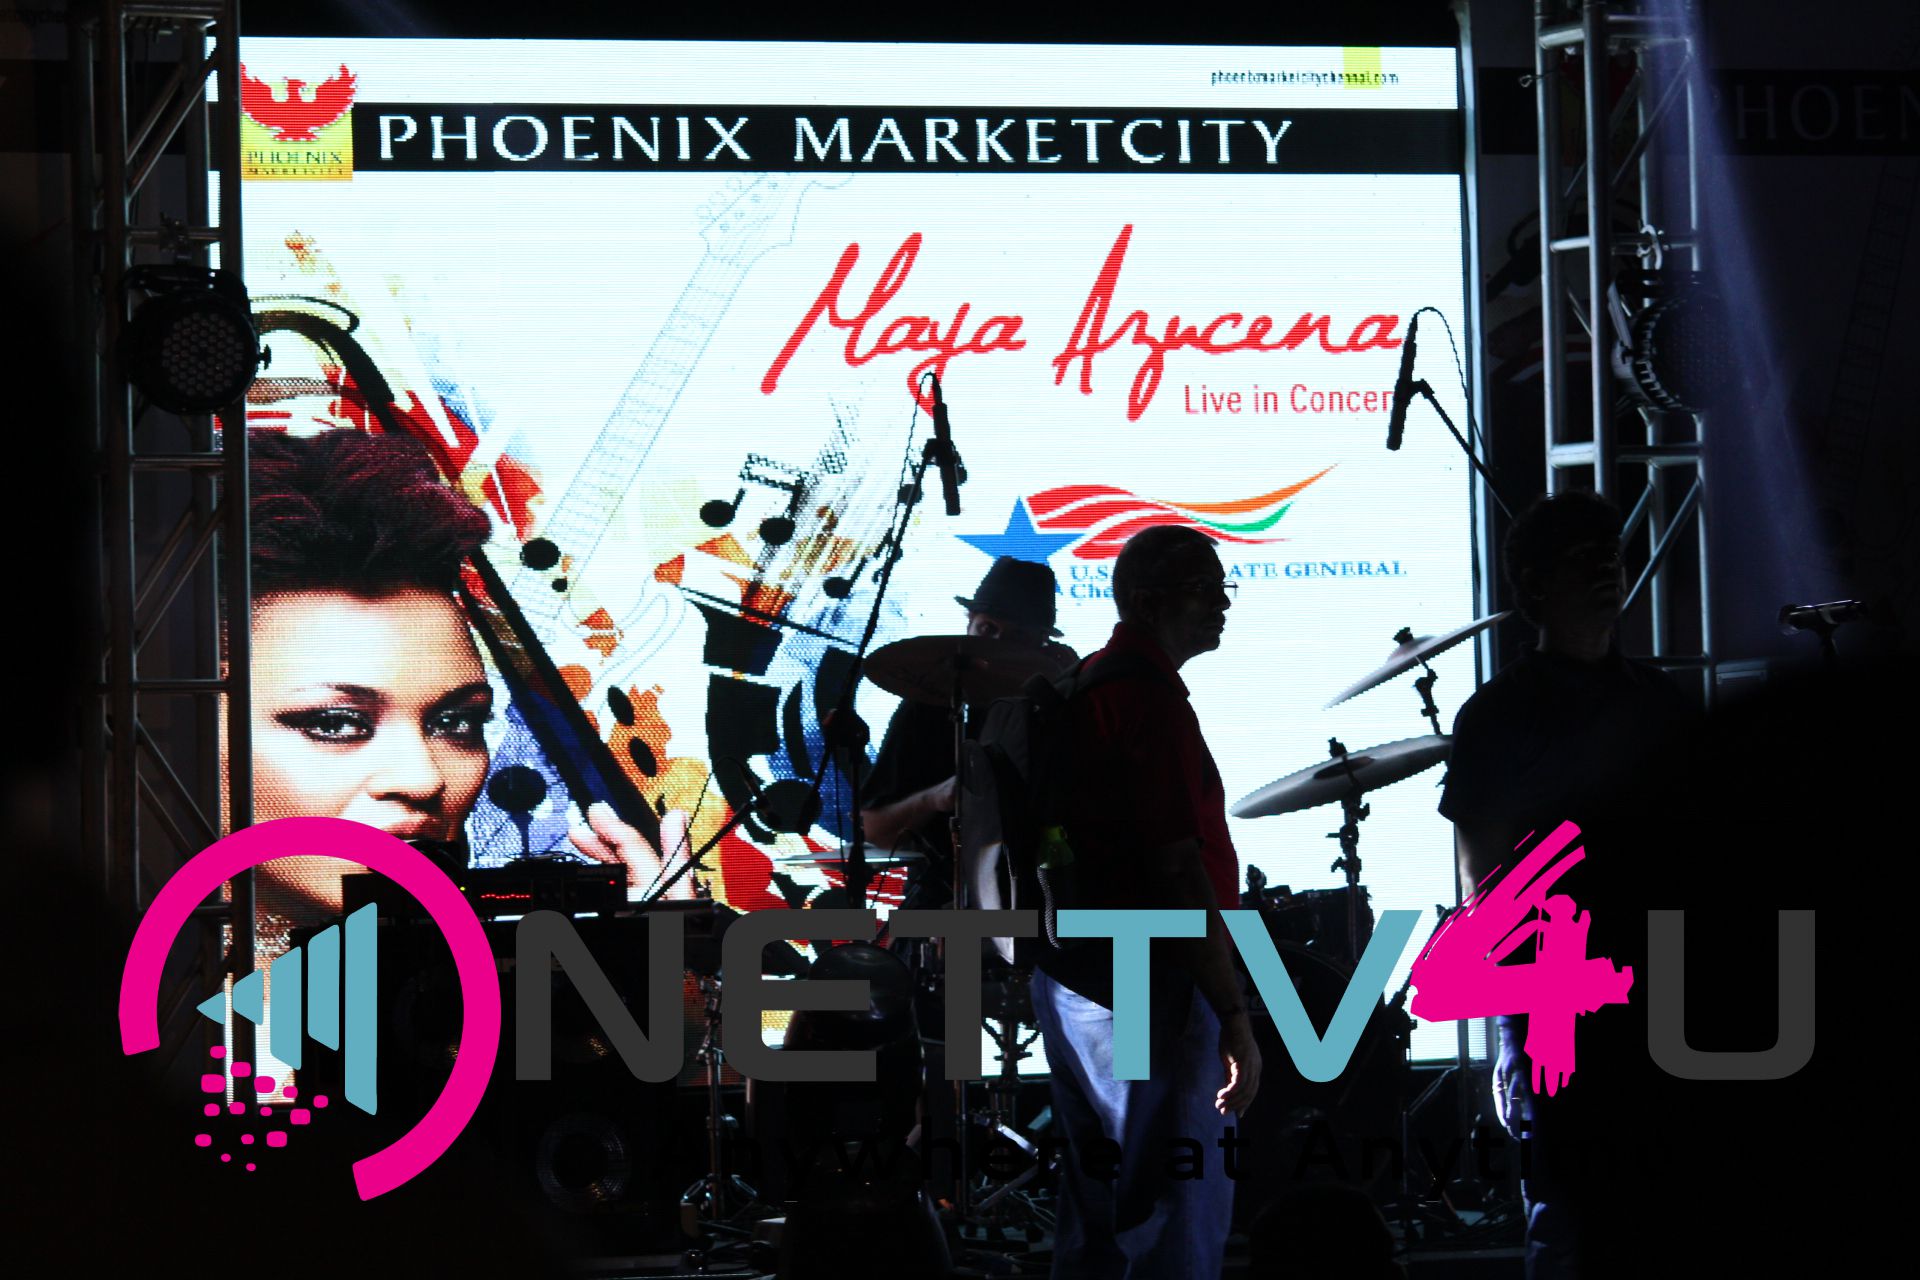 maya azucena E2 80 AC live in concert at chennai phoenix marketcity stills 72